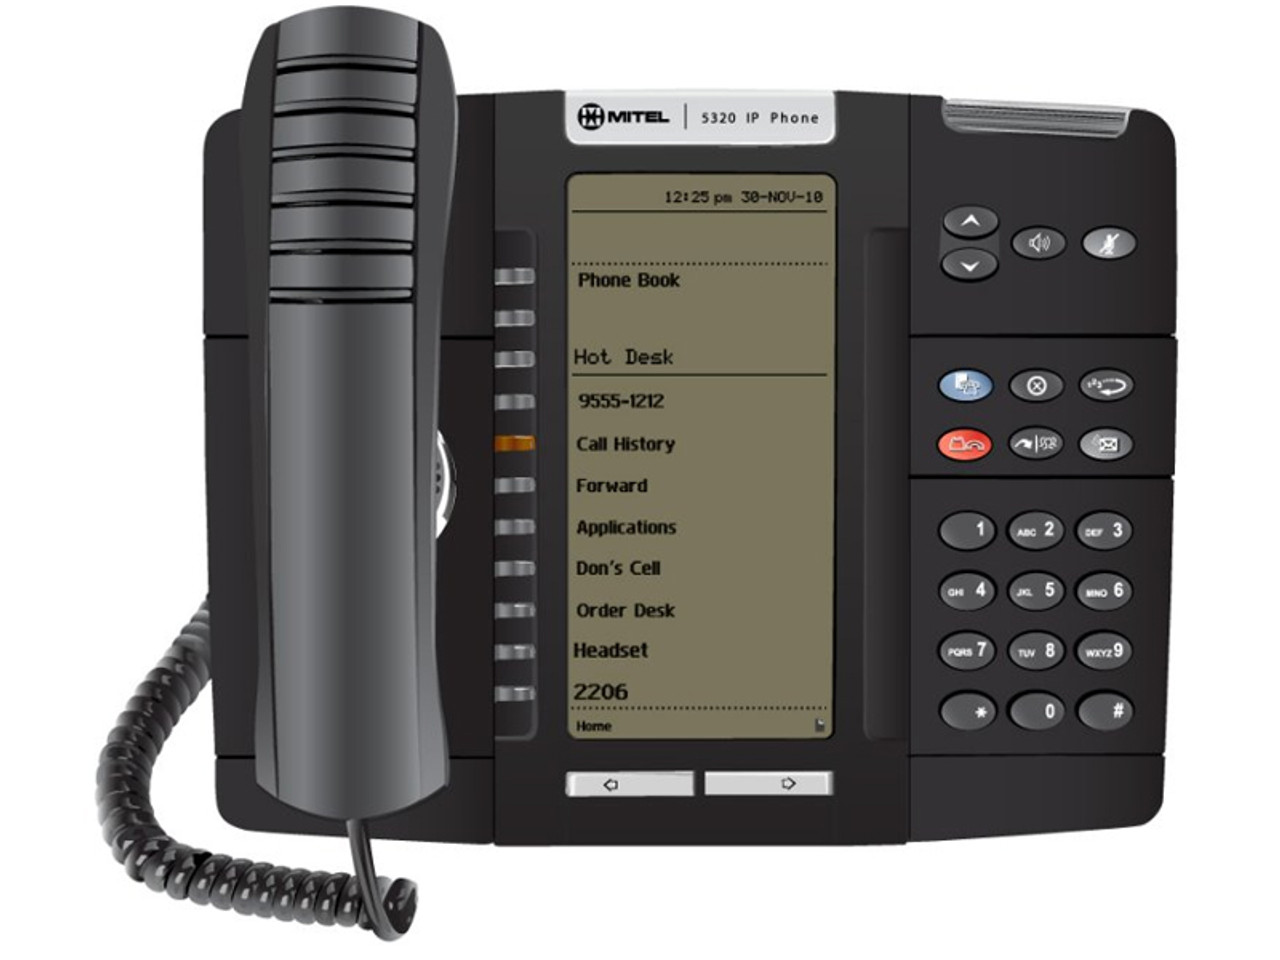 Mitel IP 5320 Phone (50006191)